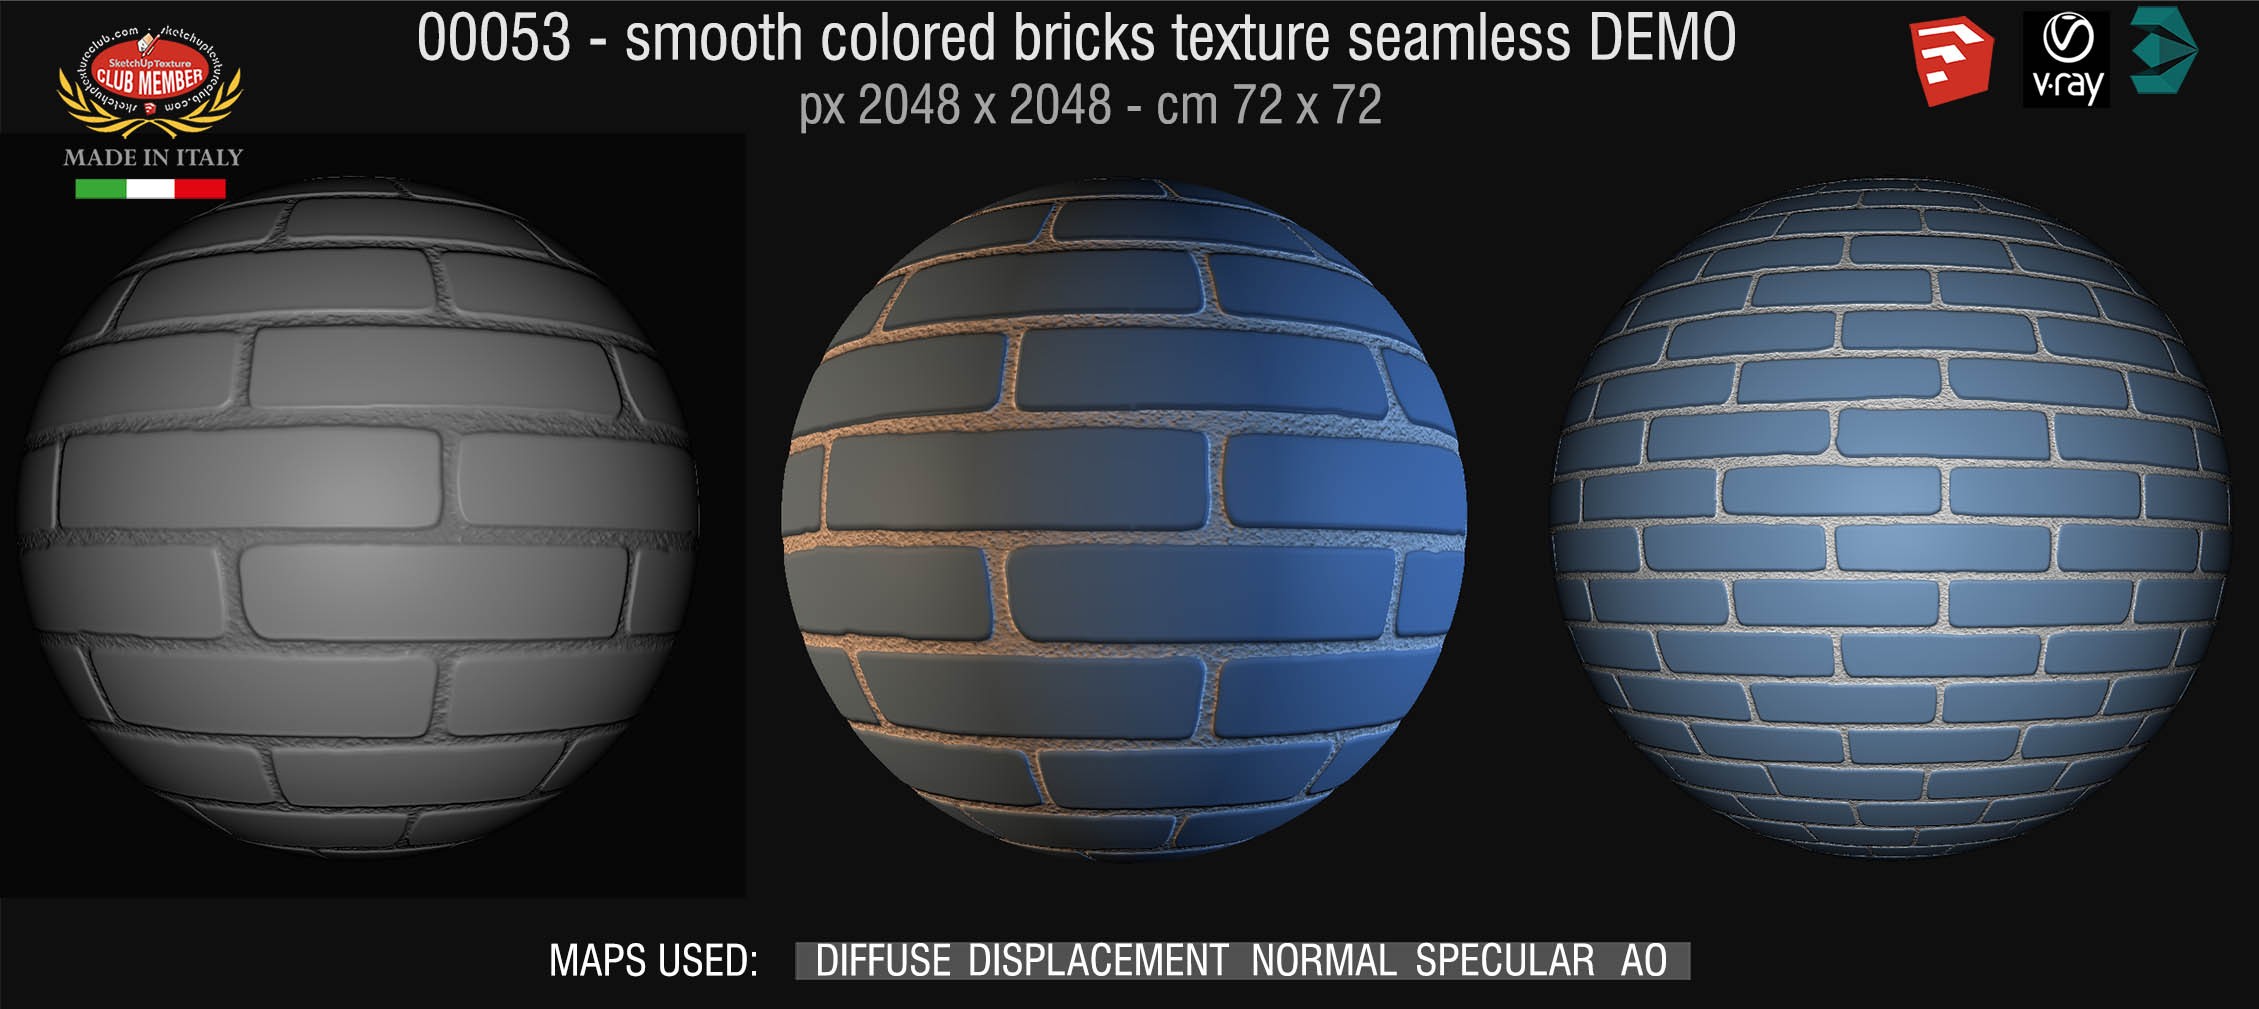 00053 smooth colored bricks texture seamless + maps DEMO